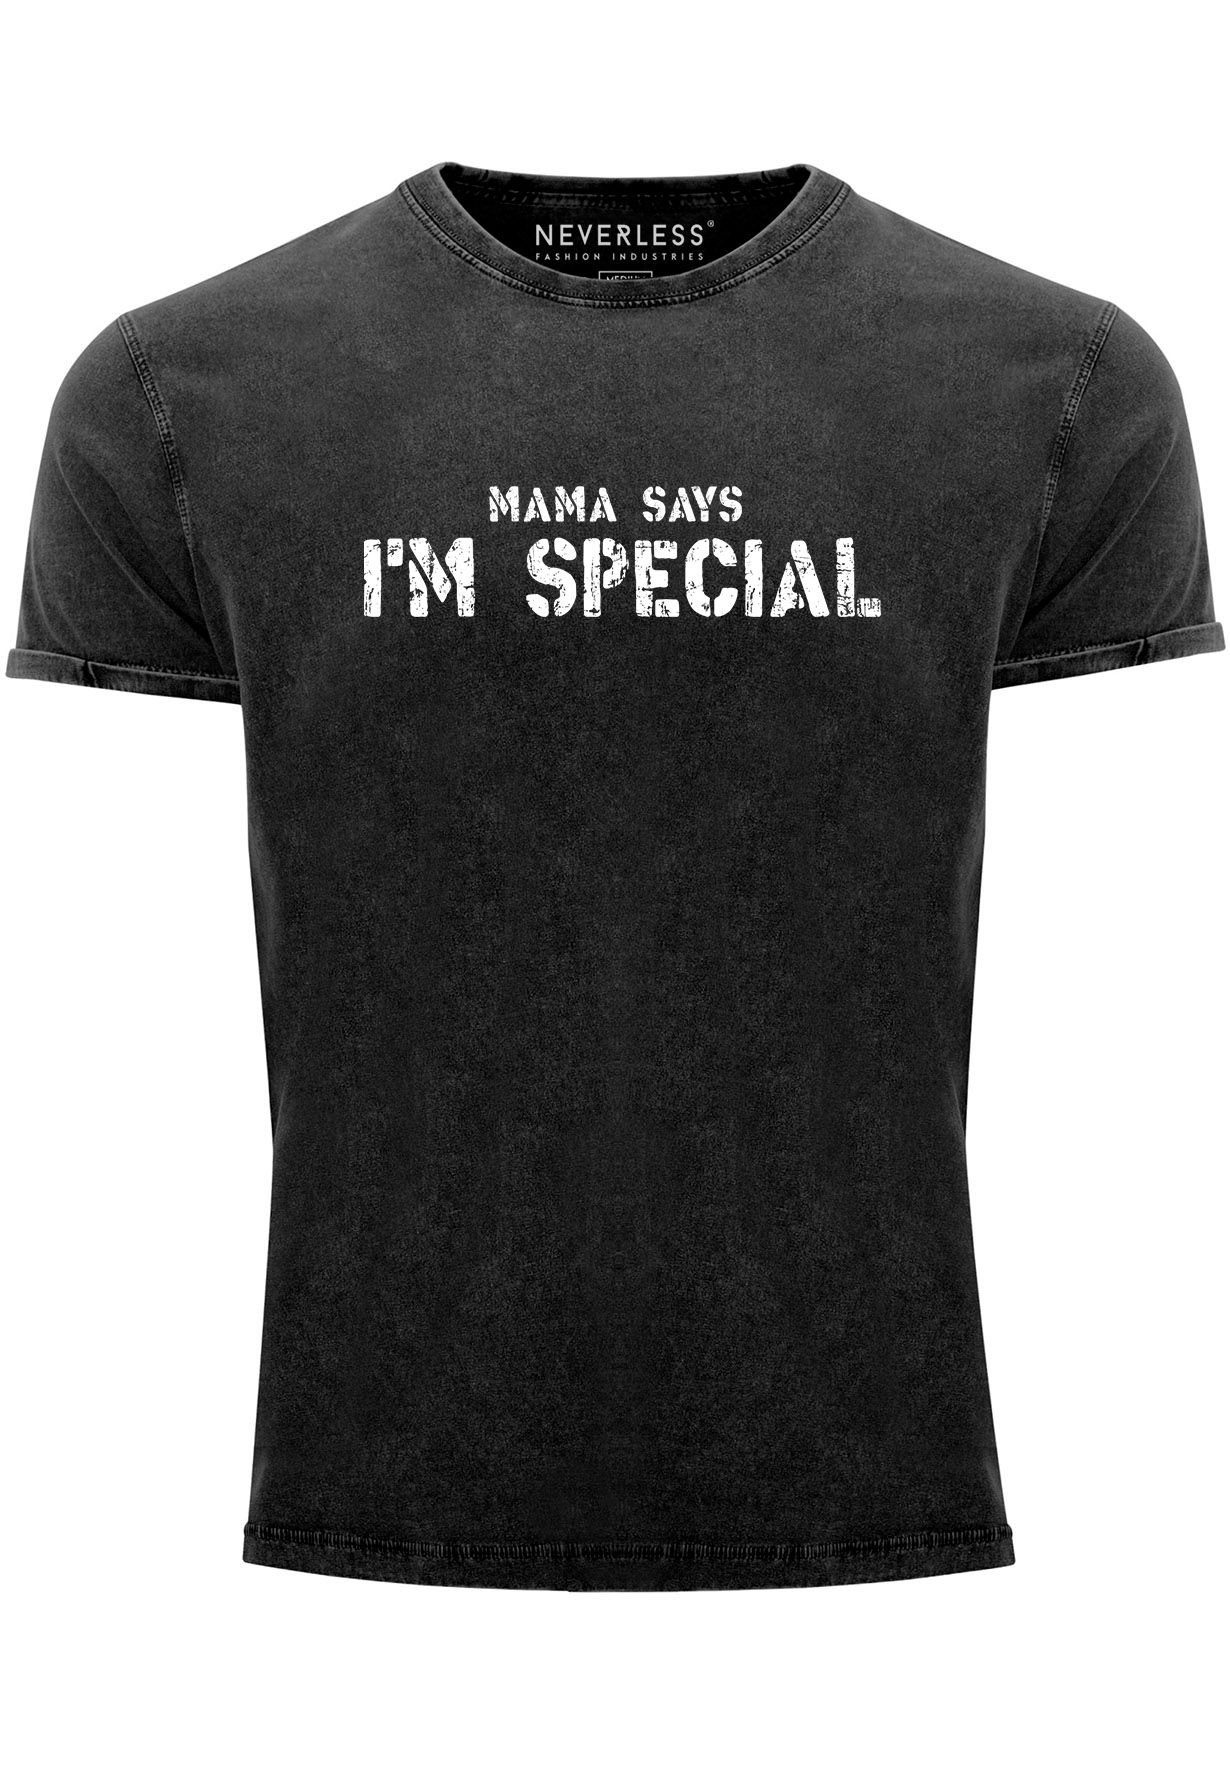 Neverless Print-Shirt Herren Vintage Shirt Shirt Spruch lustig Mama Says I Am Special Ironie mit Print